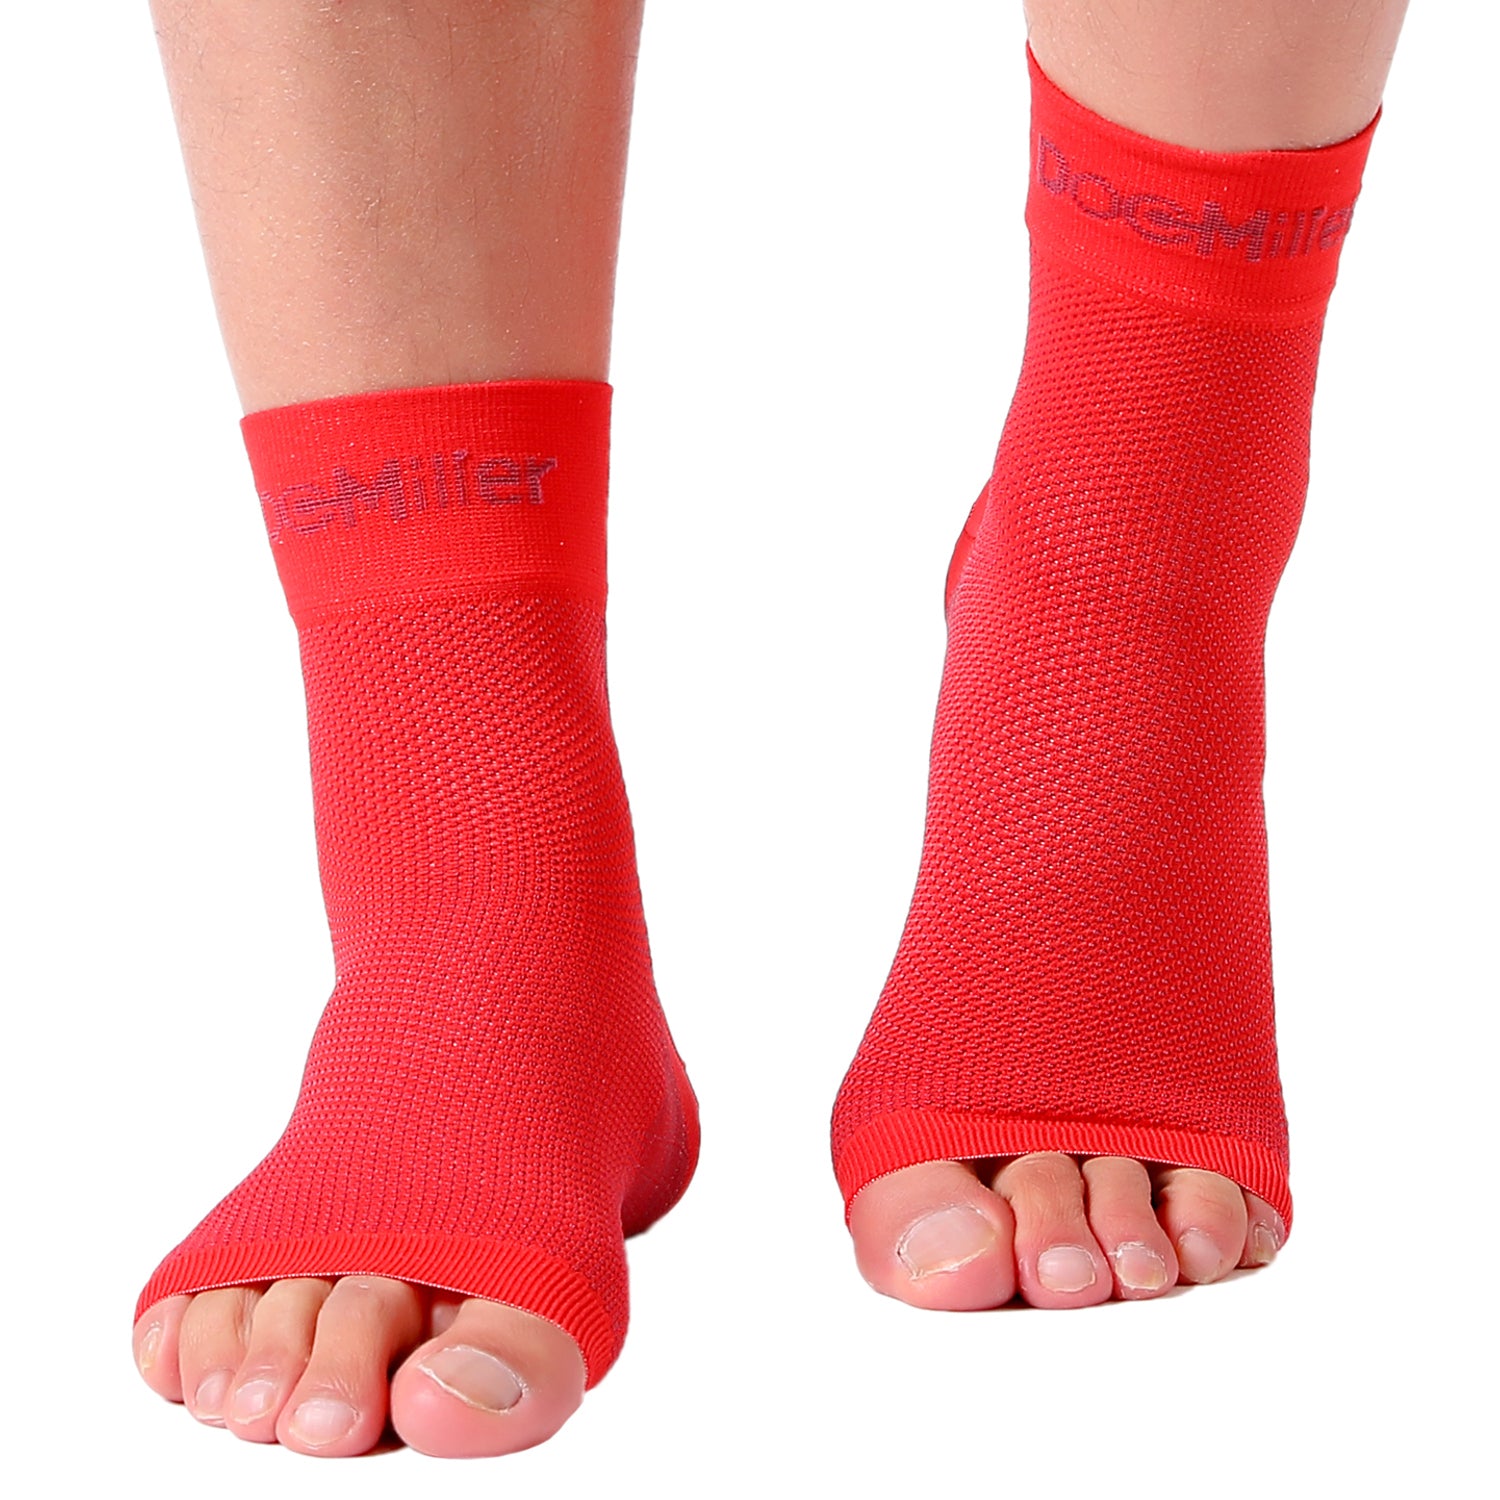 Circulation Socks for Foot Pain Relief & Circulation